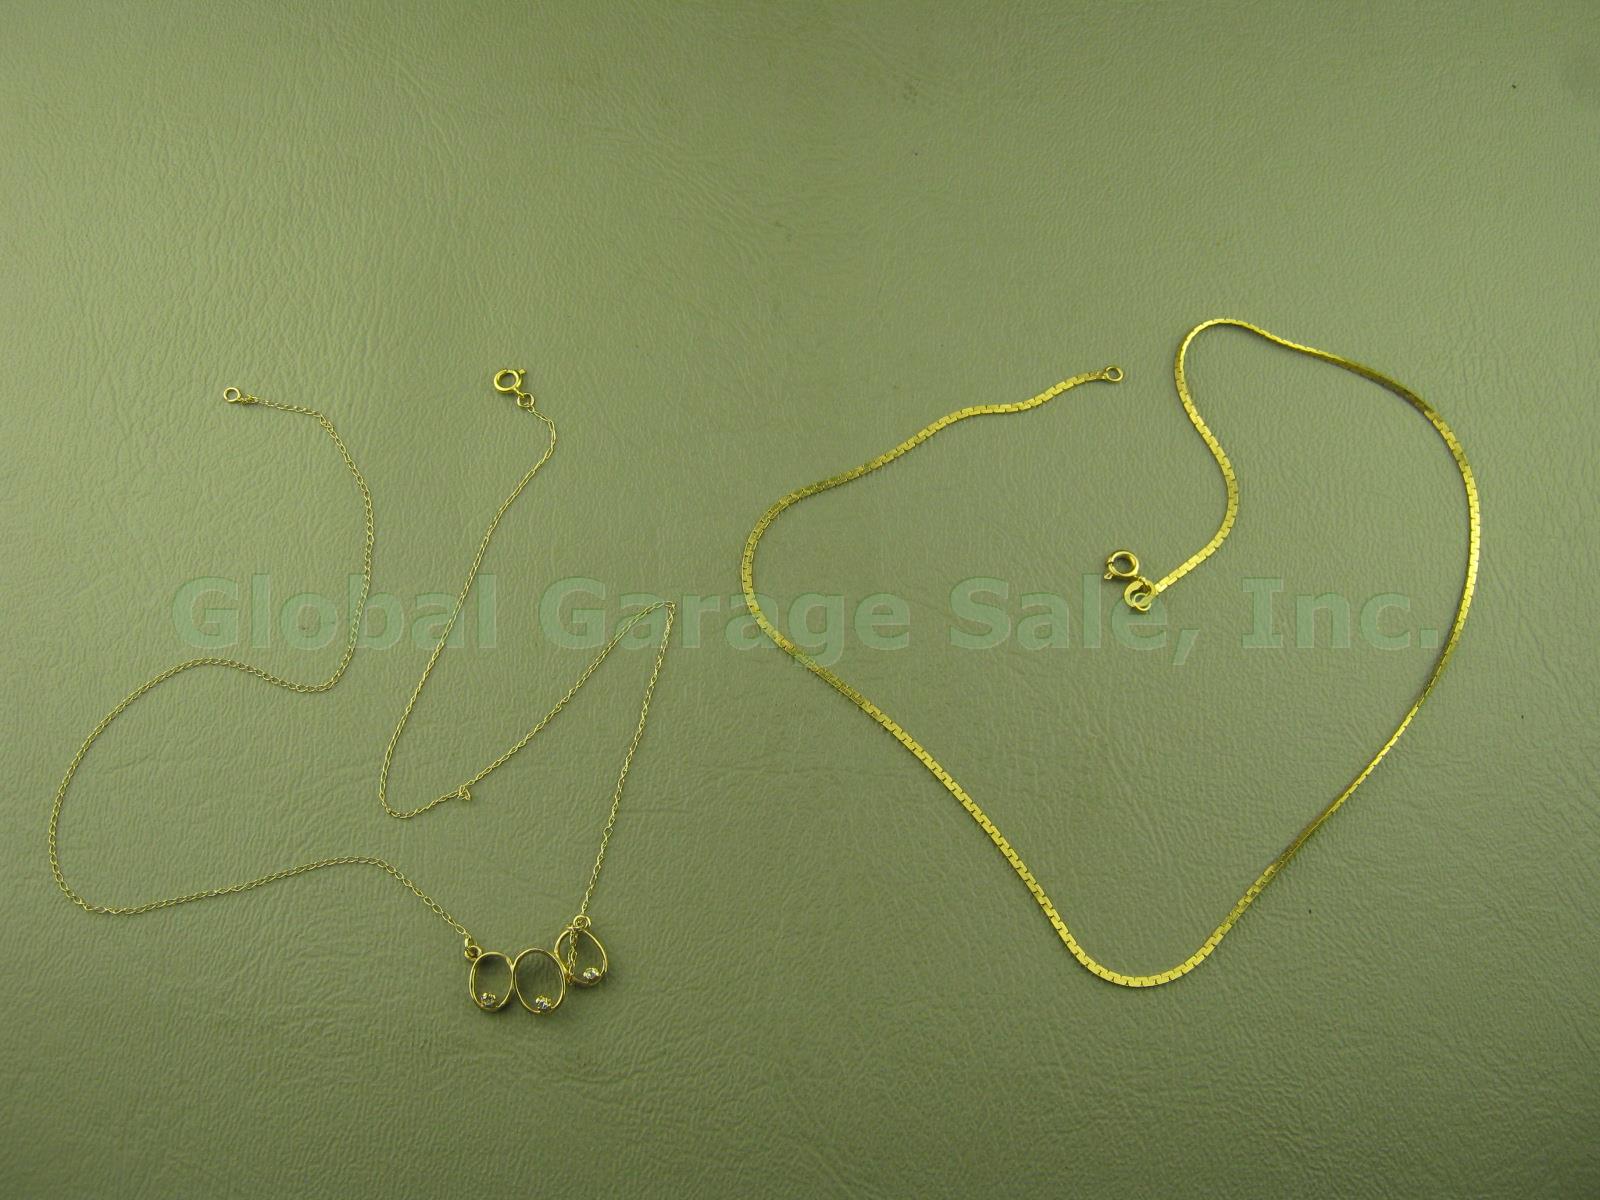 2 Vintage 14k Yellow Gold Chain Necklaces Lot Diamond 5.1 Grams No Reserve Price